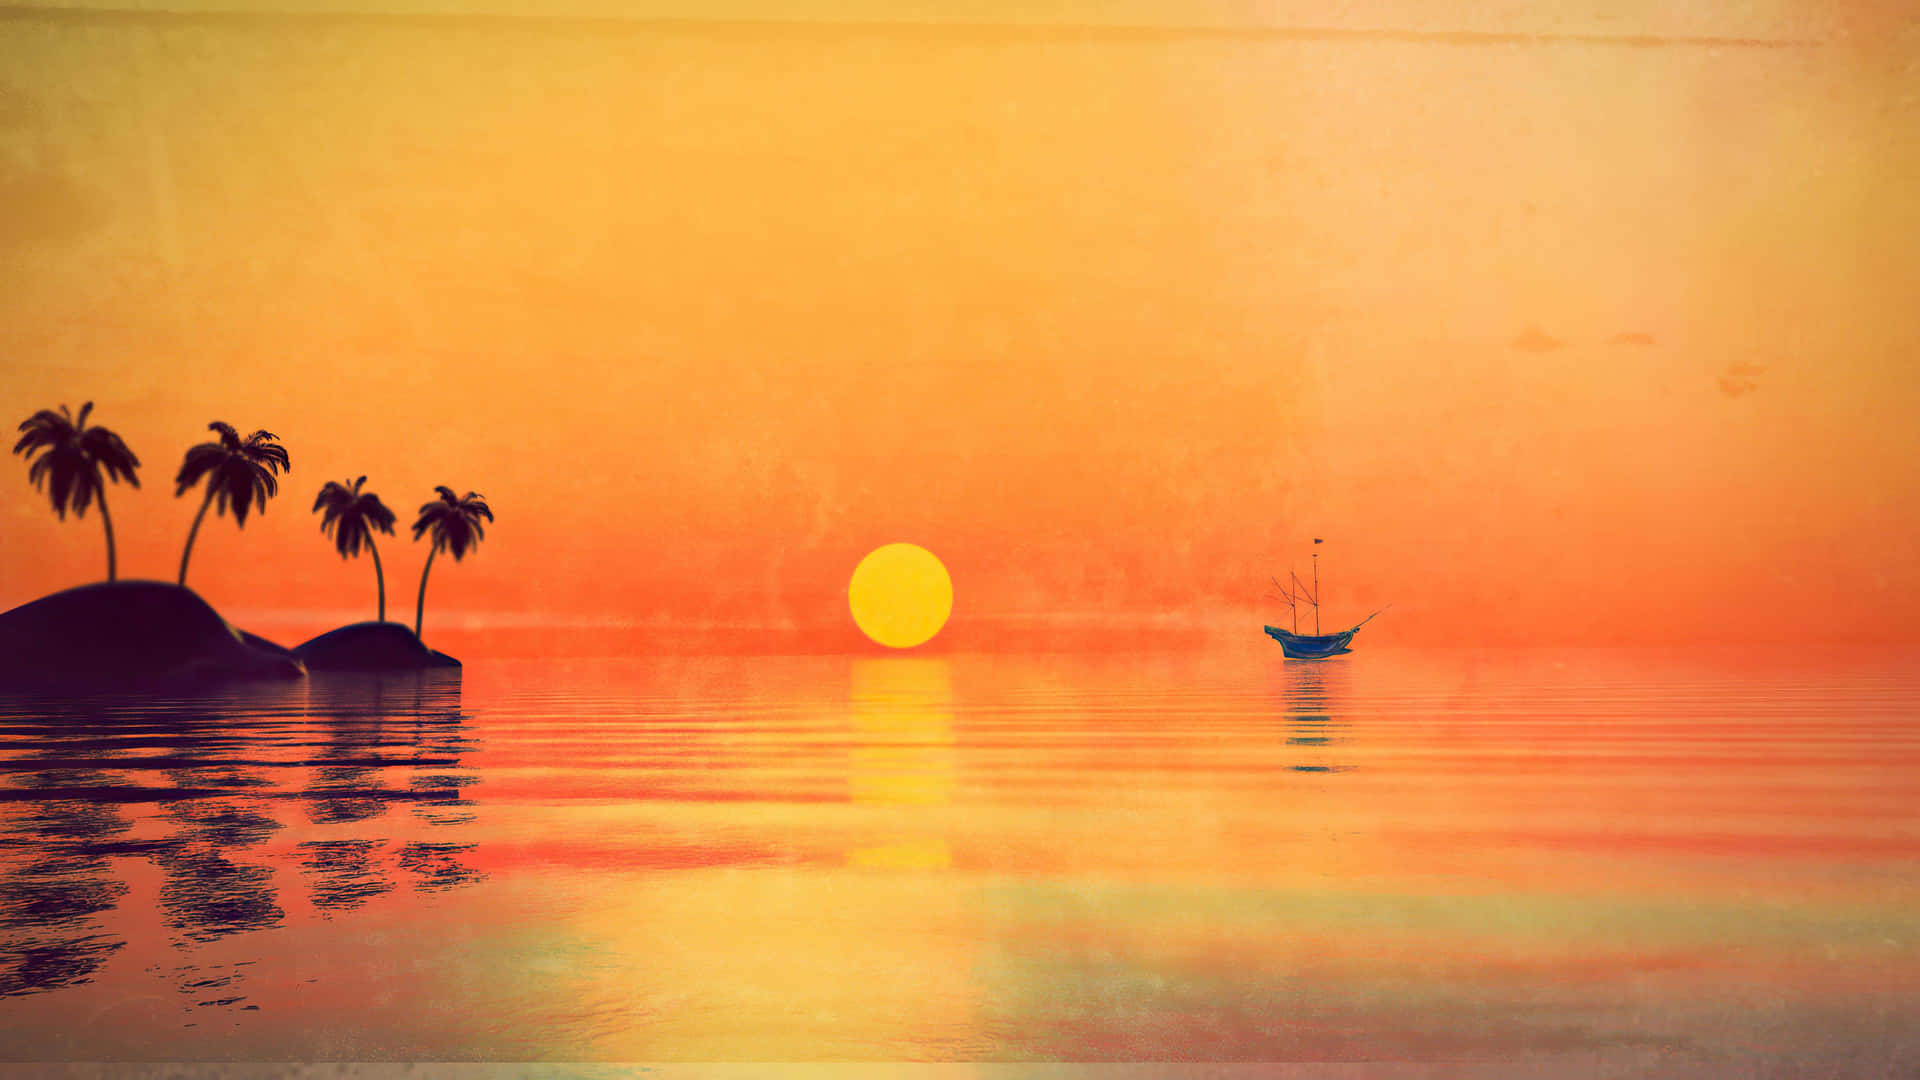 Tropical Sunset Serenity4 K Ultra Wide Wallpaper